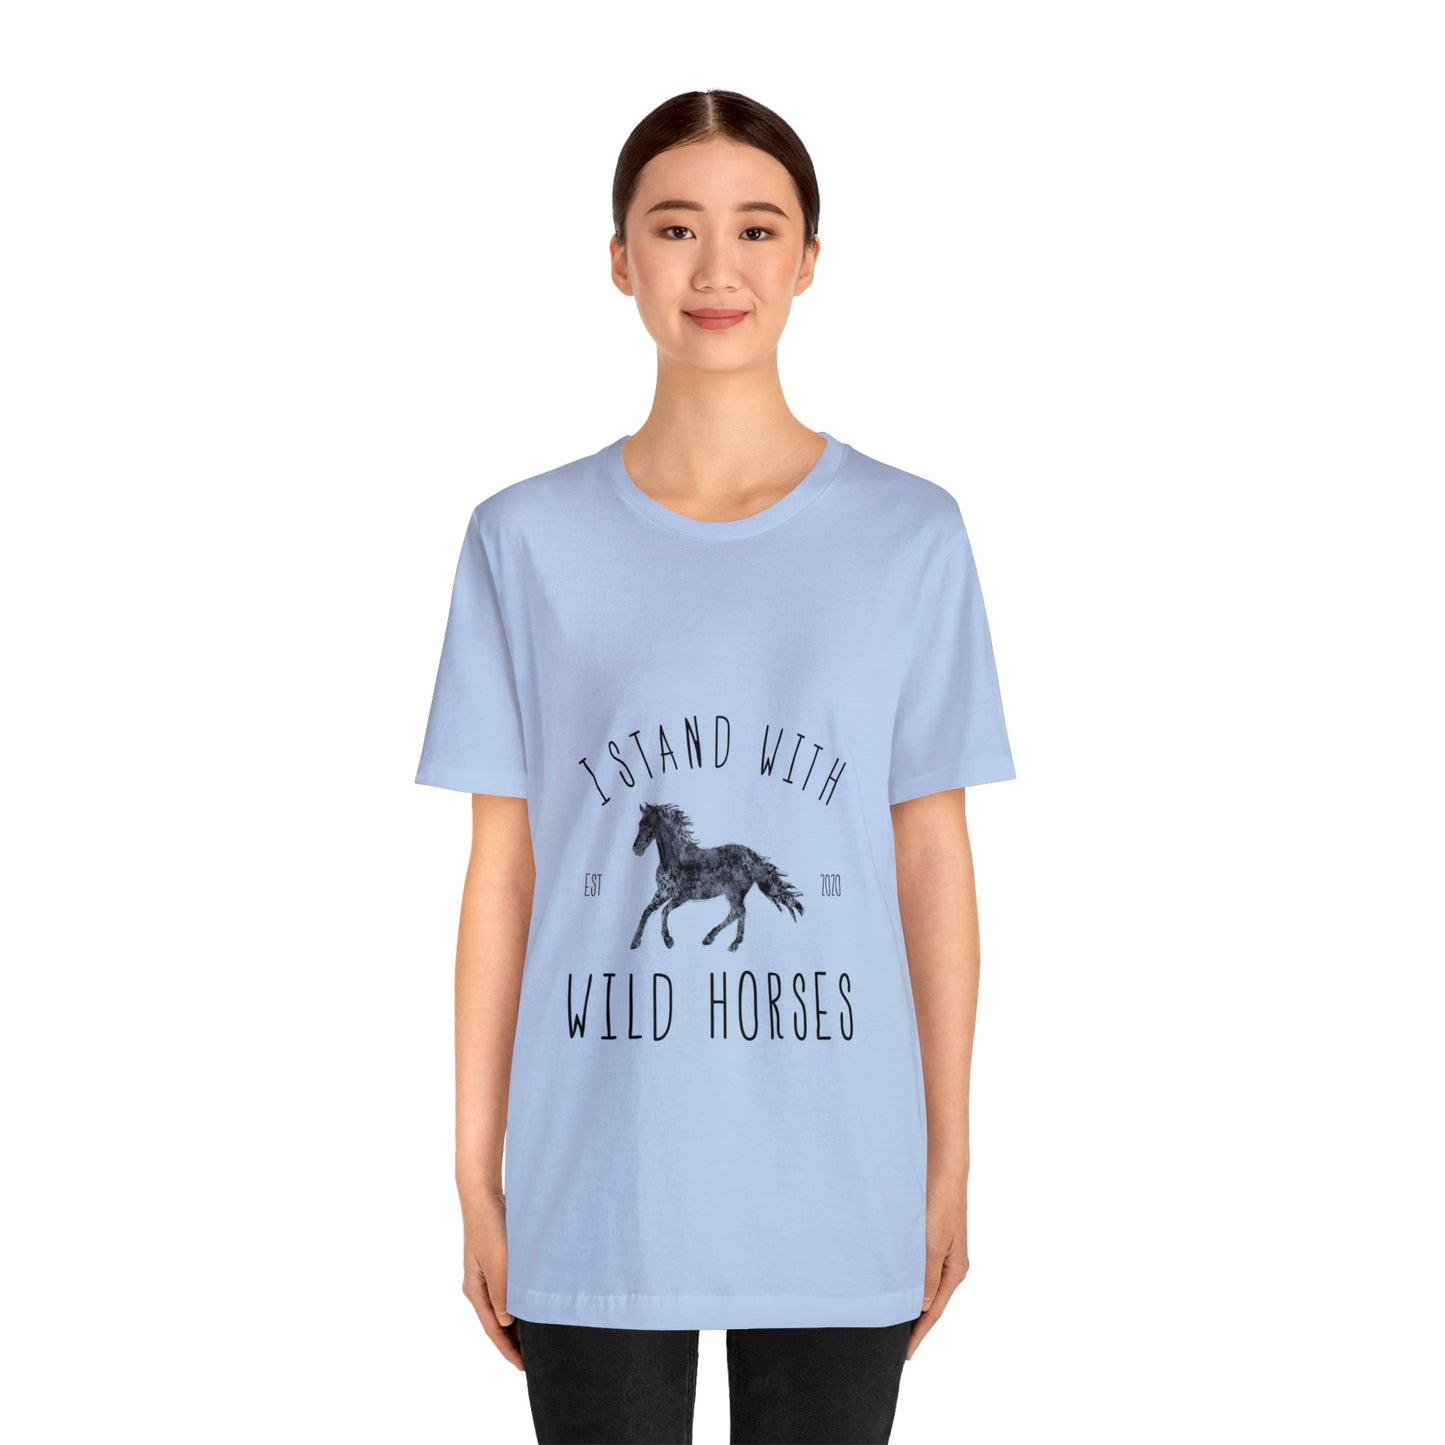 "I Stand with Wild Horses" Unisex T-Shirt